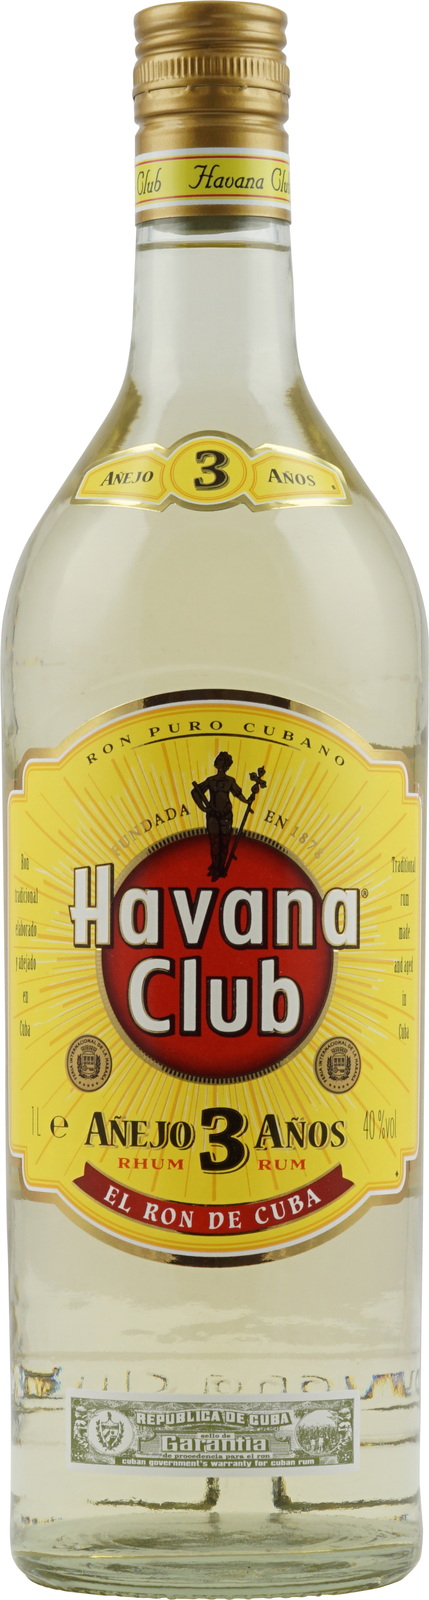 Havana Club Añejo Rum (3 40% i 1 Liter Vol. hier Jahre)